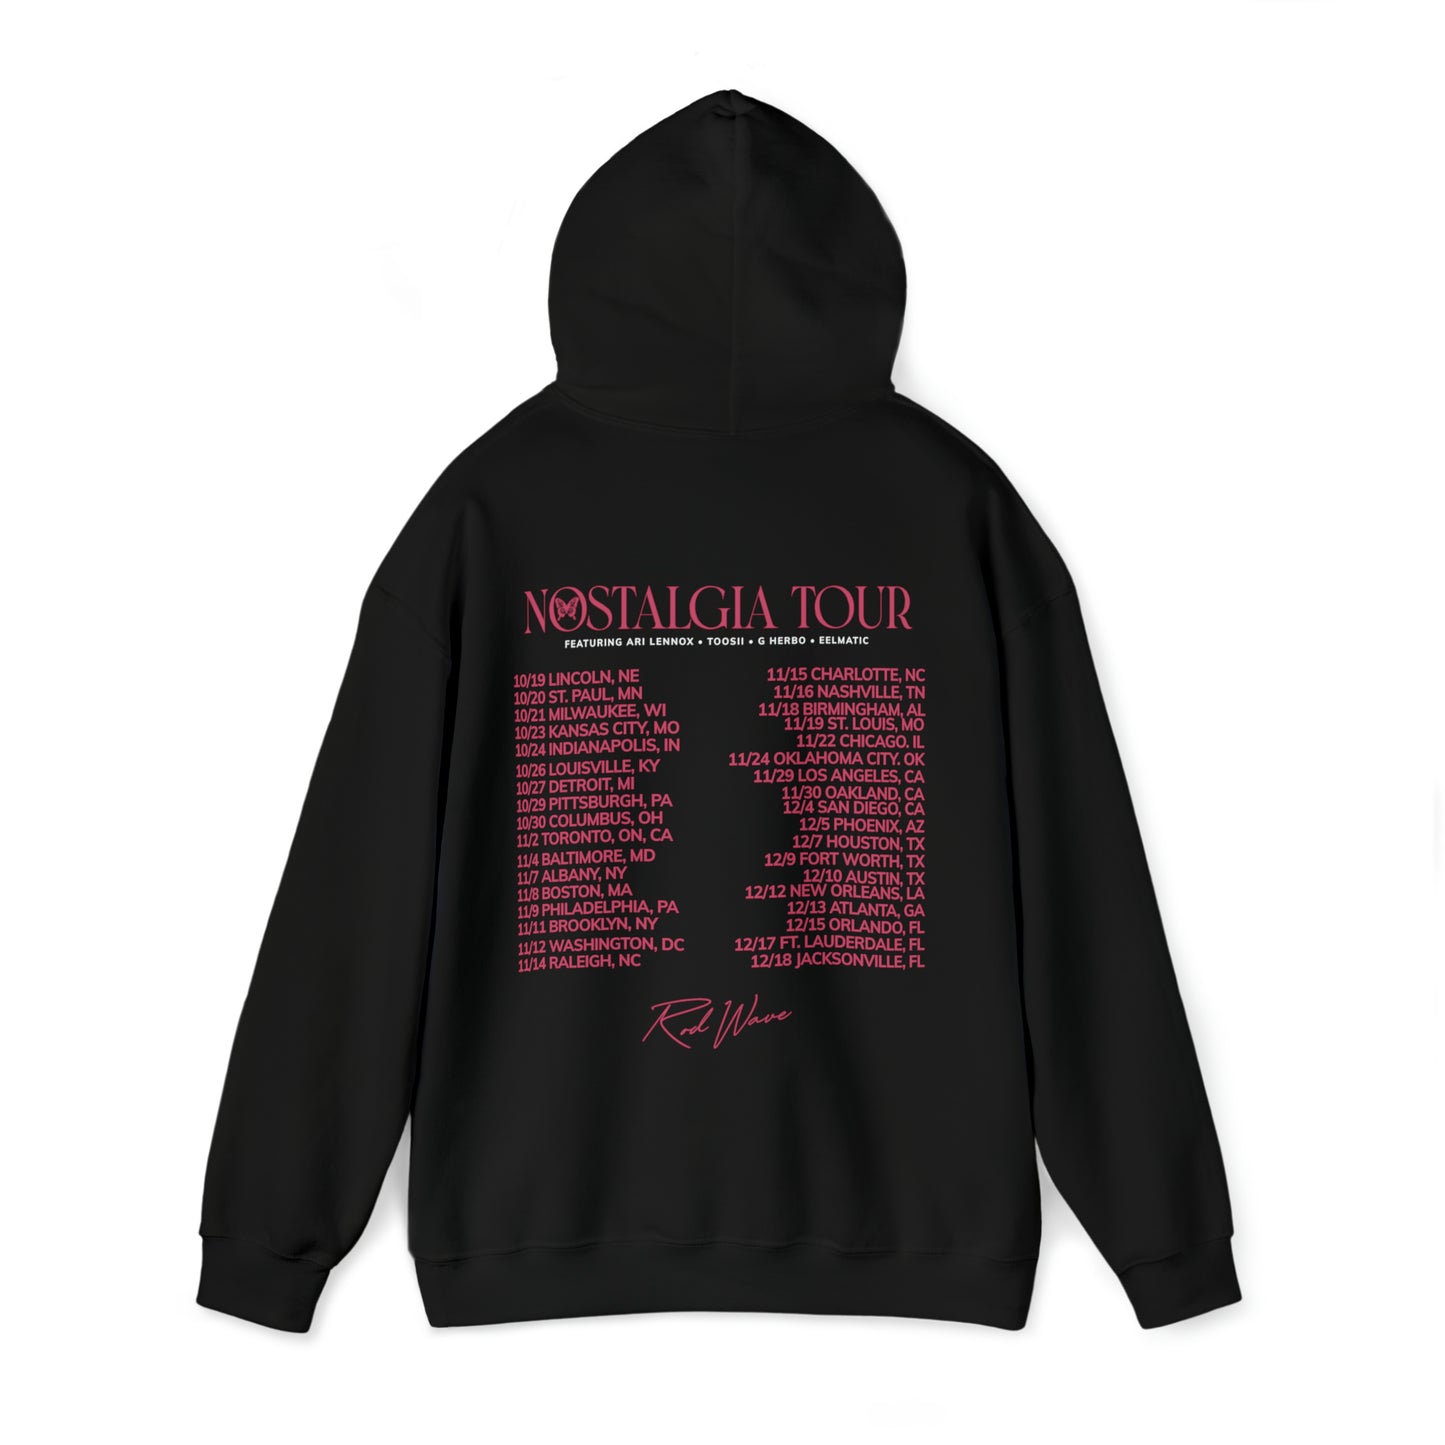 Pink Rod Wave Nostalgia Tour Hooded Sweatshirt